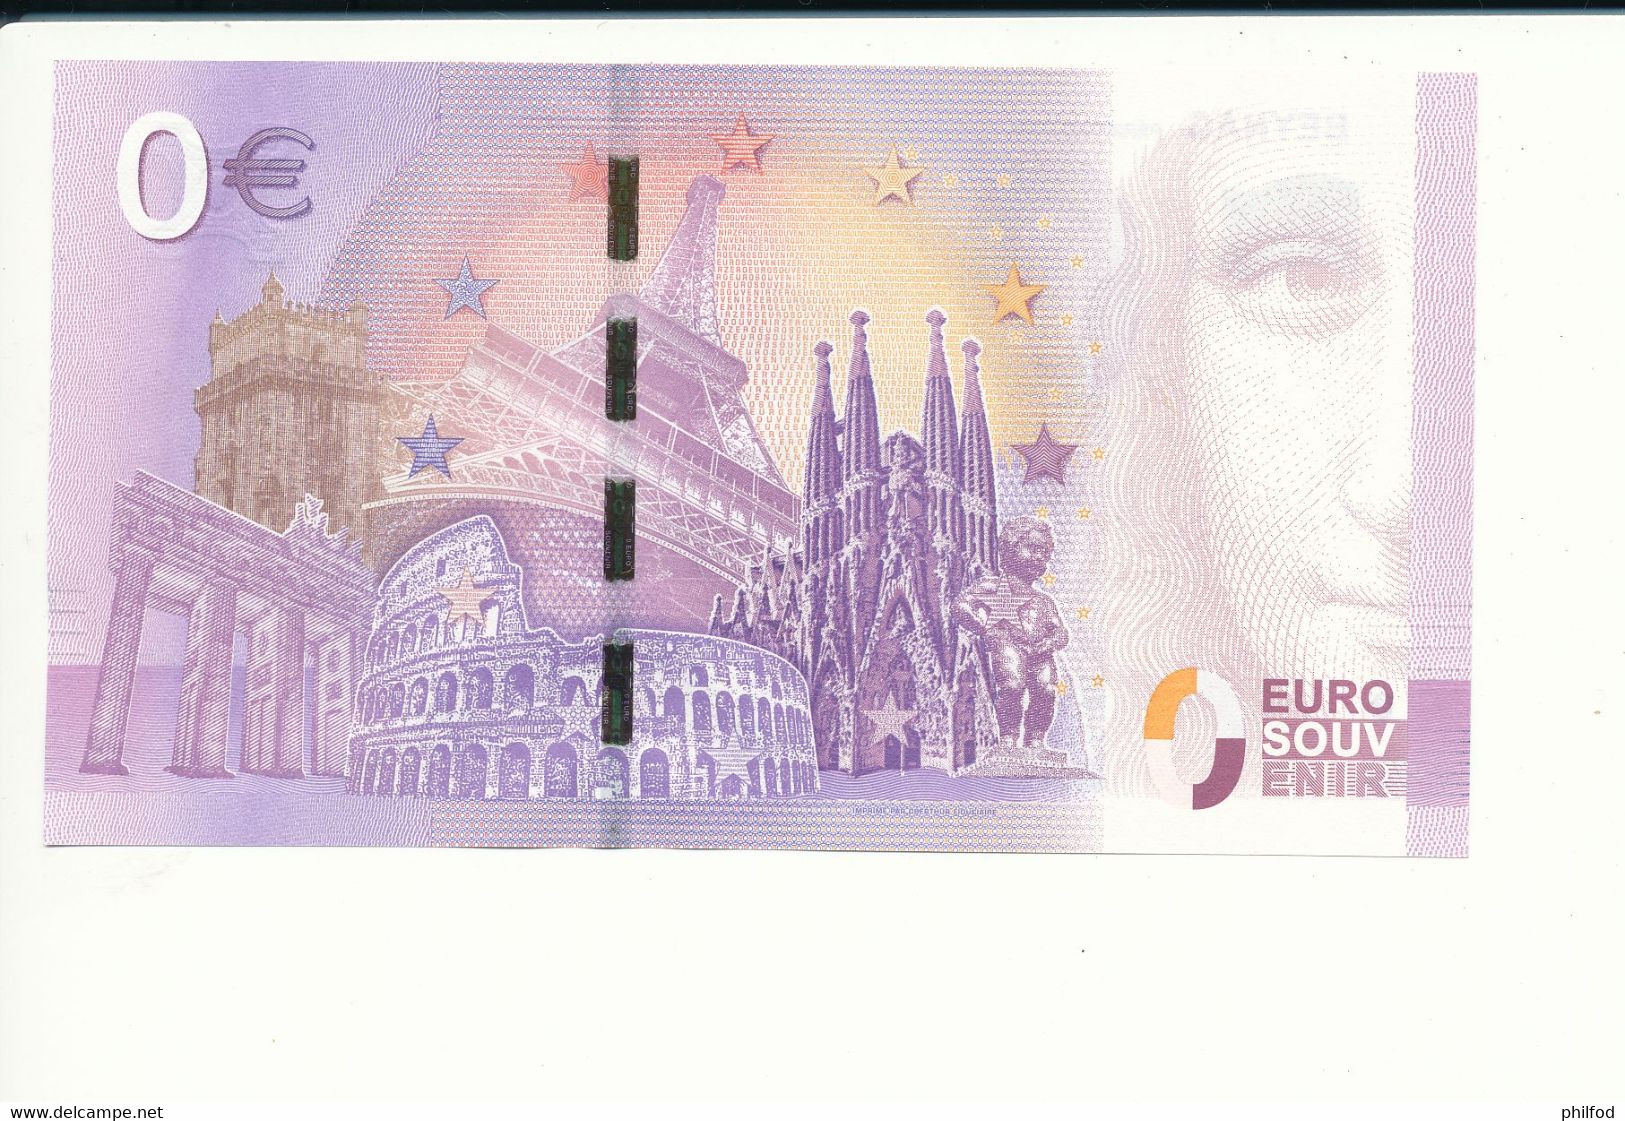 Billet Souvenir - 0 Euro - UELW - 2017- 1 - BEYNAC PERIGORD NOIR - N° 153 - Billet épuisé - Kilowaar - Bankbiljetten